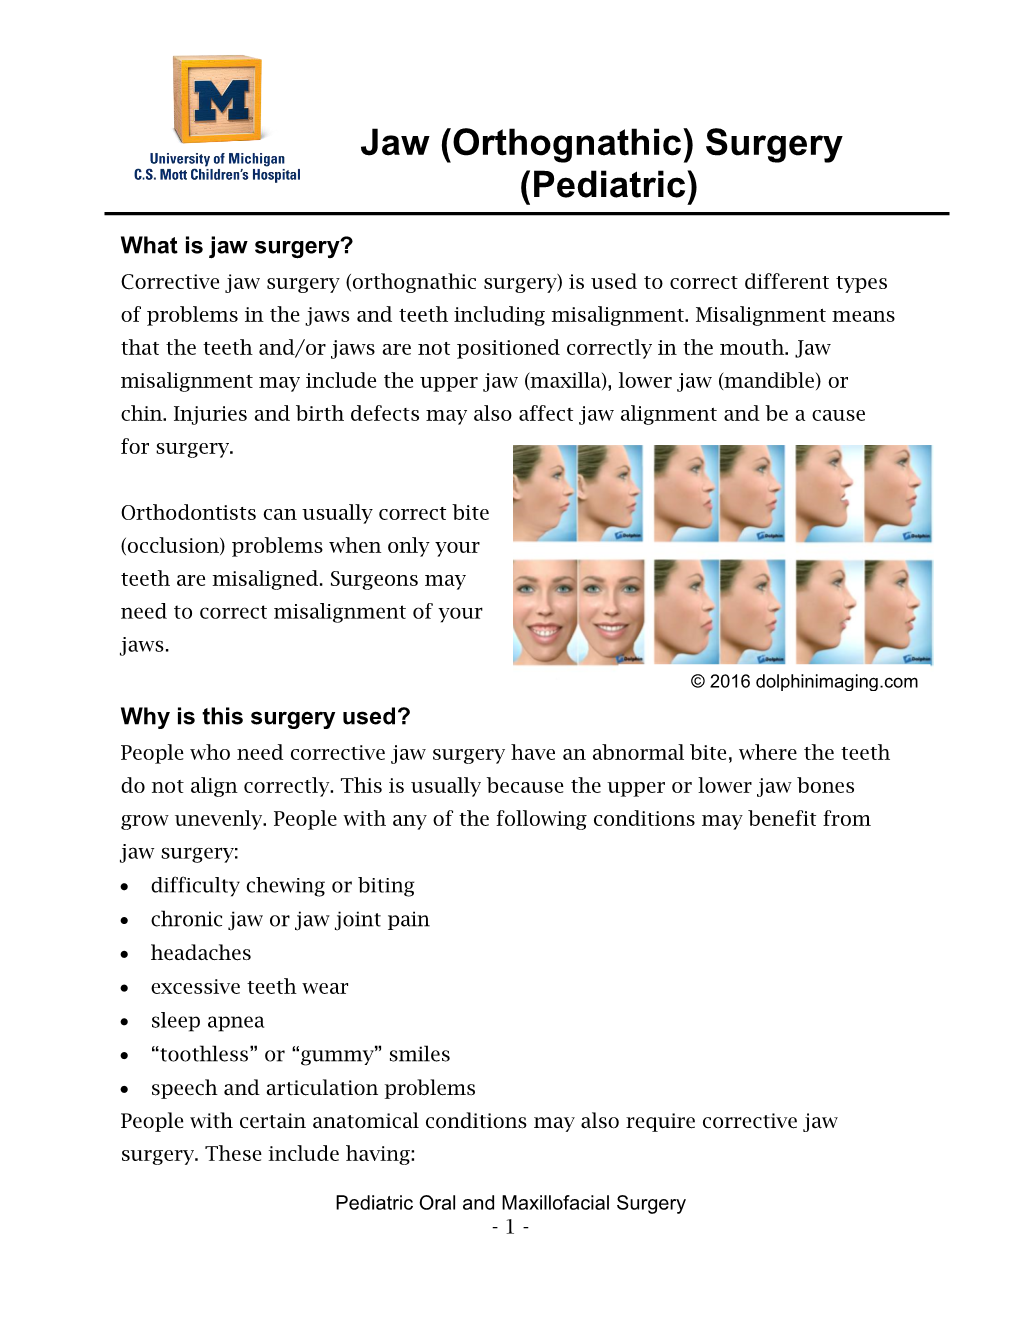 Jaw (Orthognathic) Surgery (Pediatric)